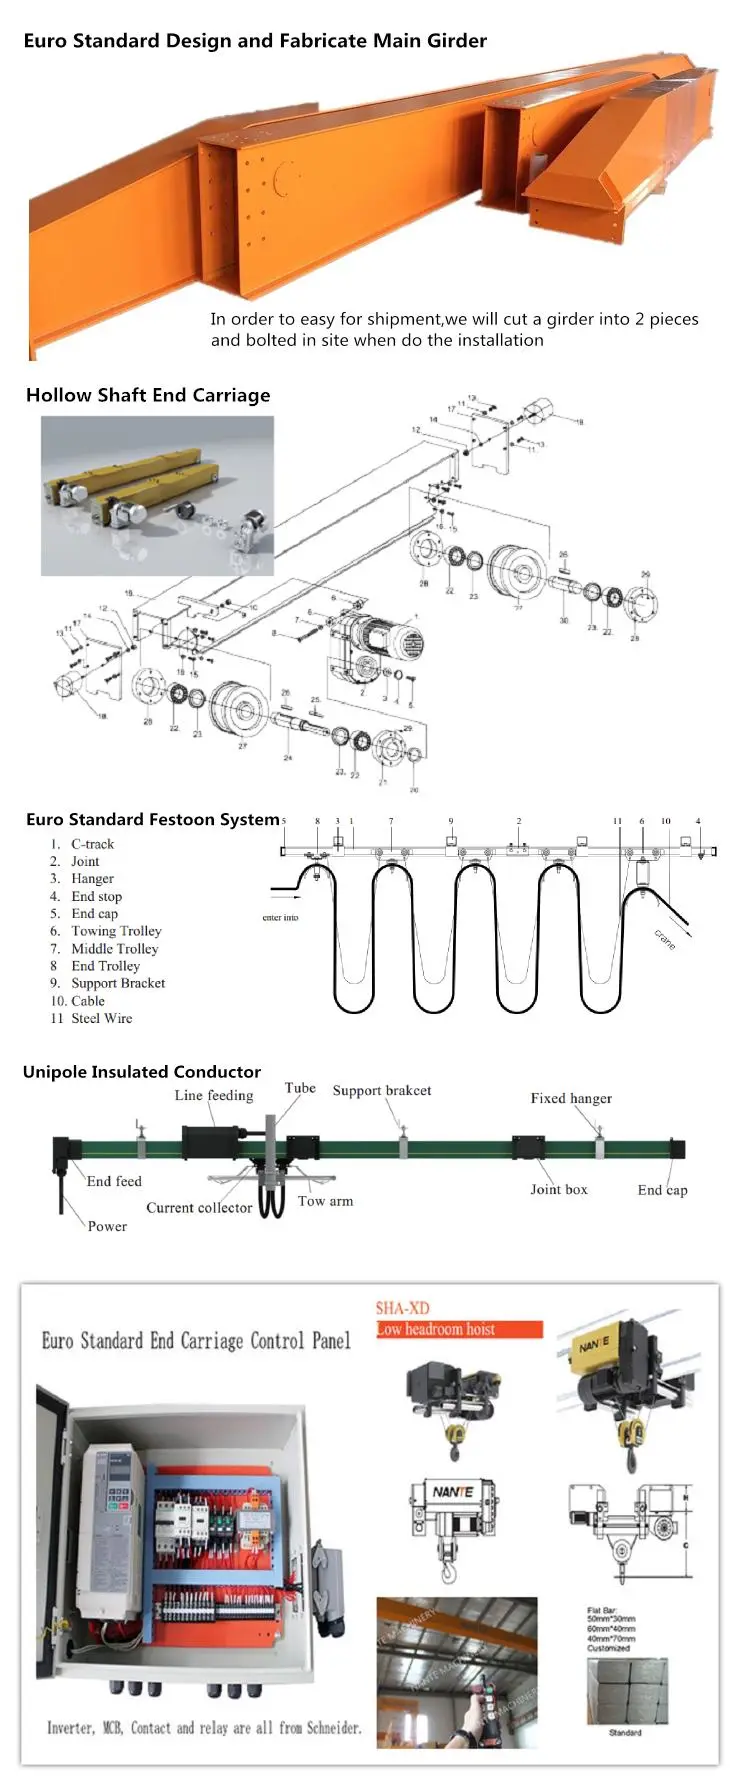 Long-Term Research Euiropean Standard Overhead Crane for Automobiles/Bridge Crane